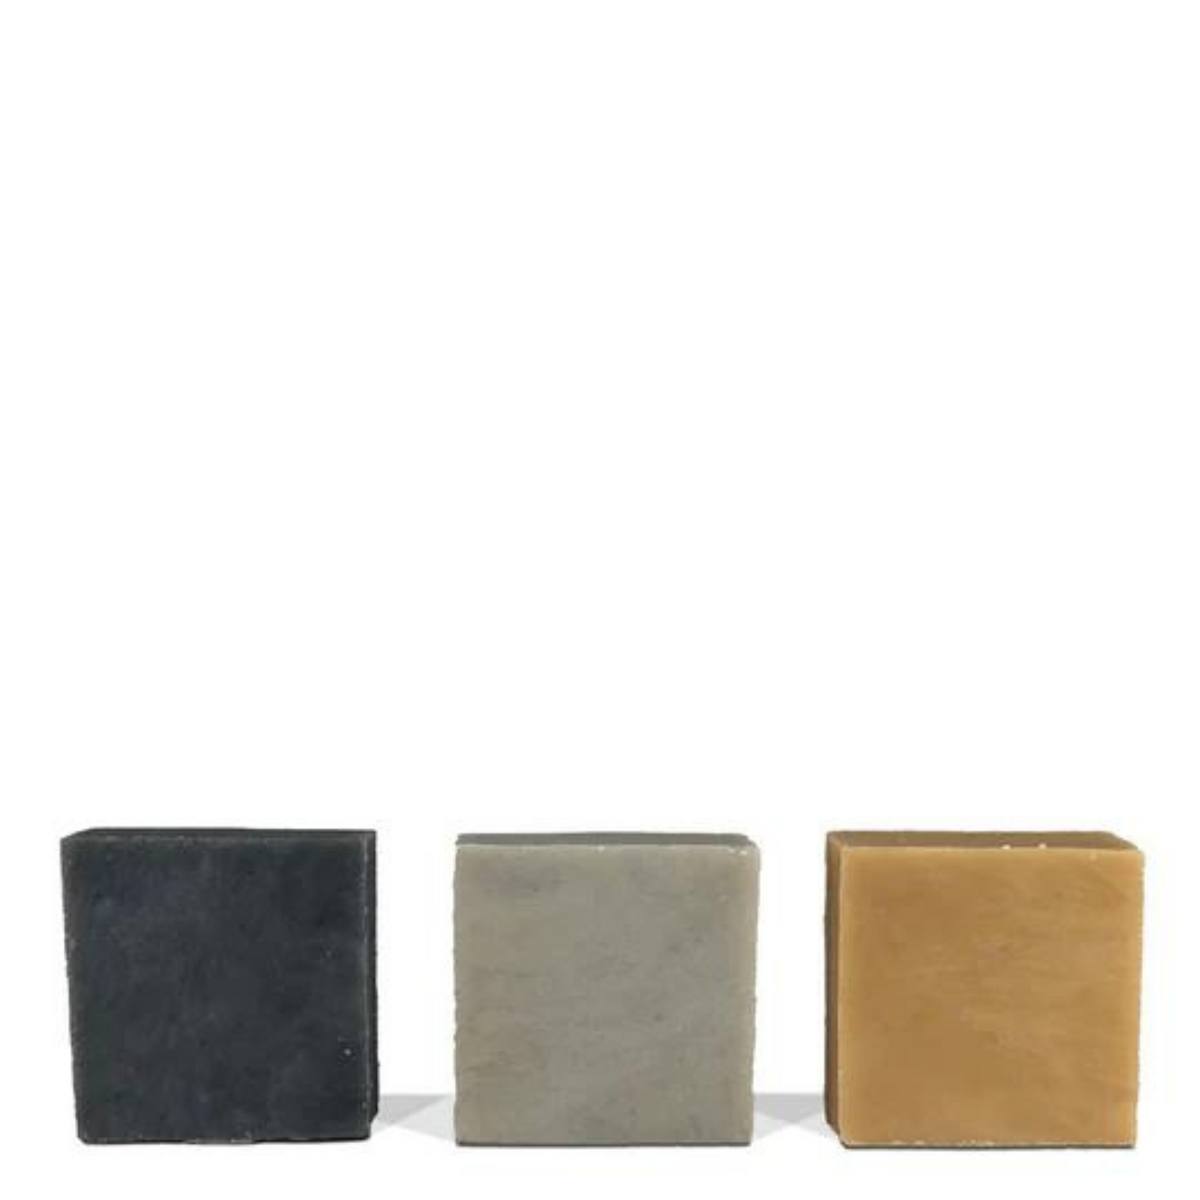 Primary Image of FZOTIC Soap Gift Box (3 x 2.8 oz)